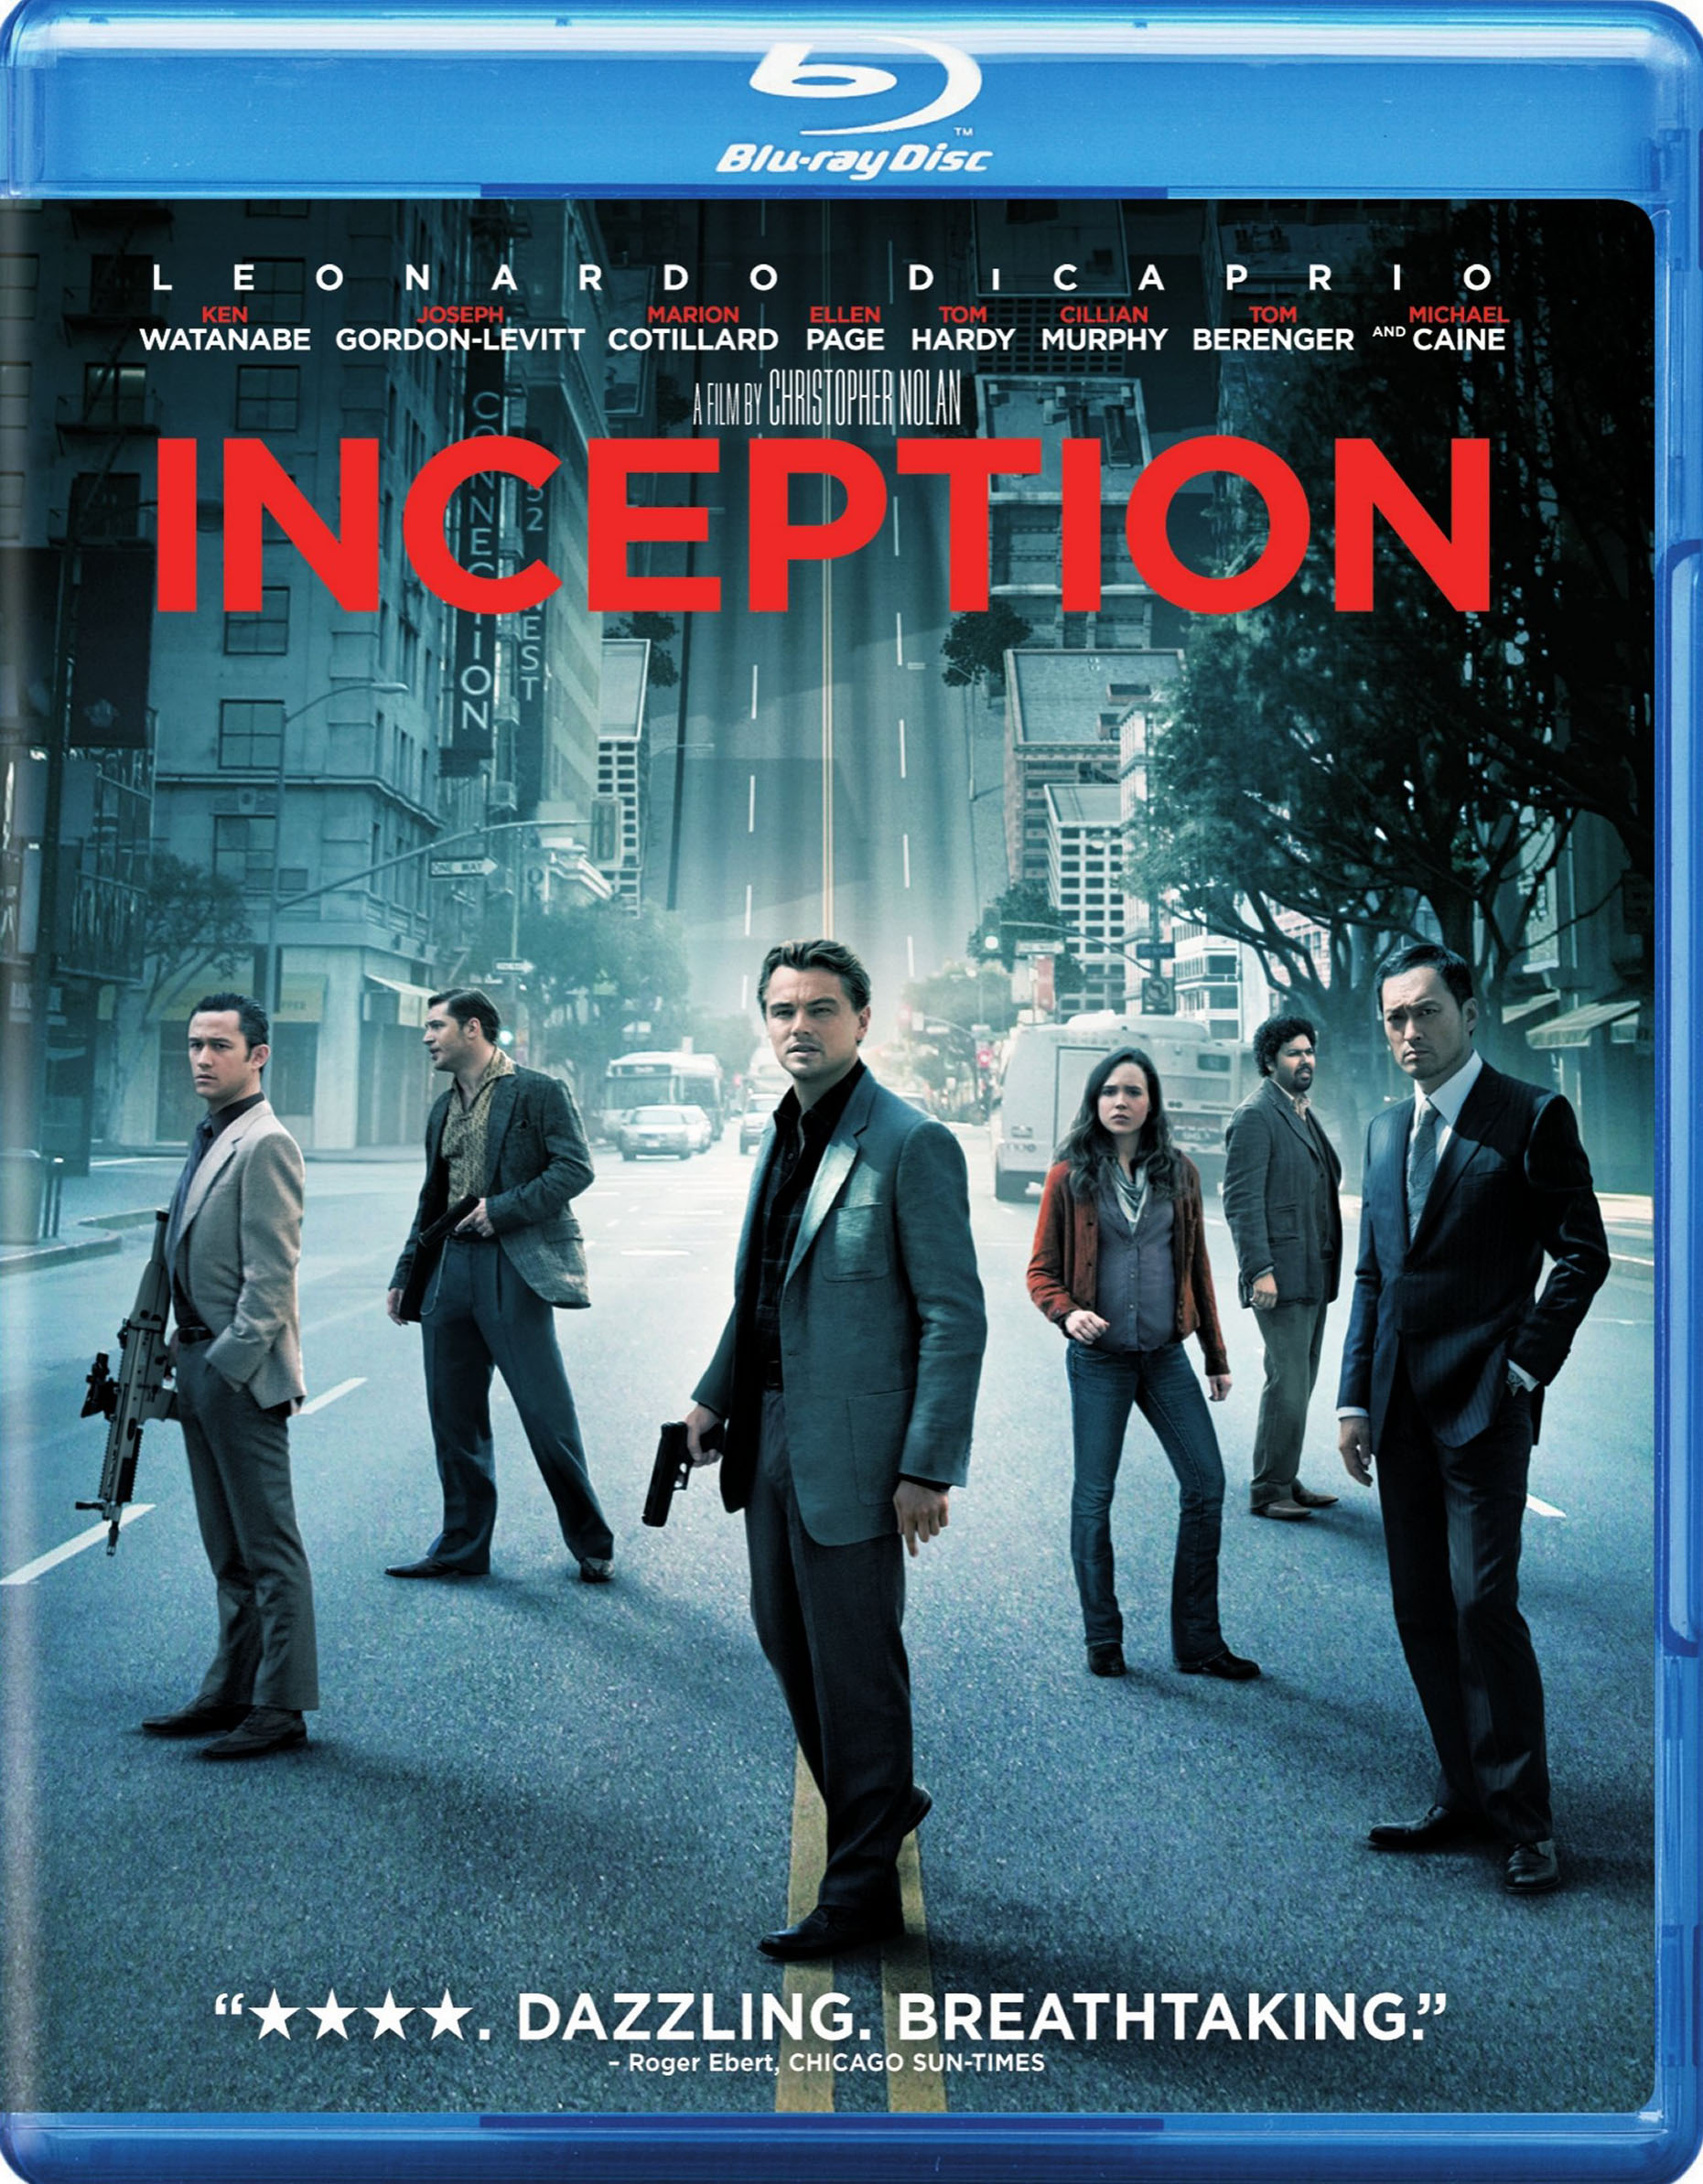 The Inspection (Blu-ray + Digital Copy) 